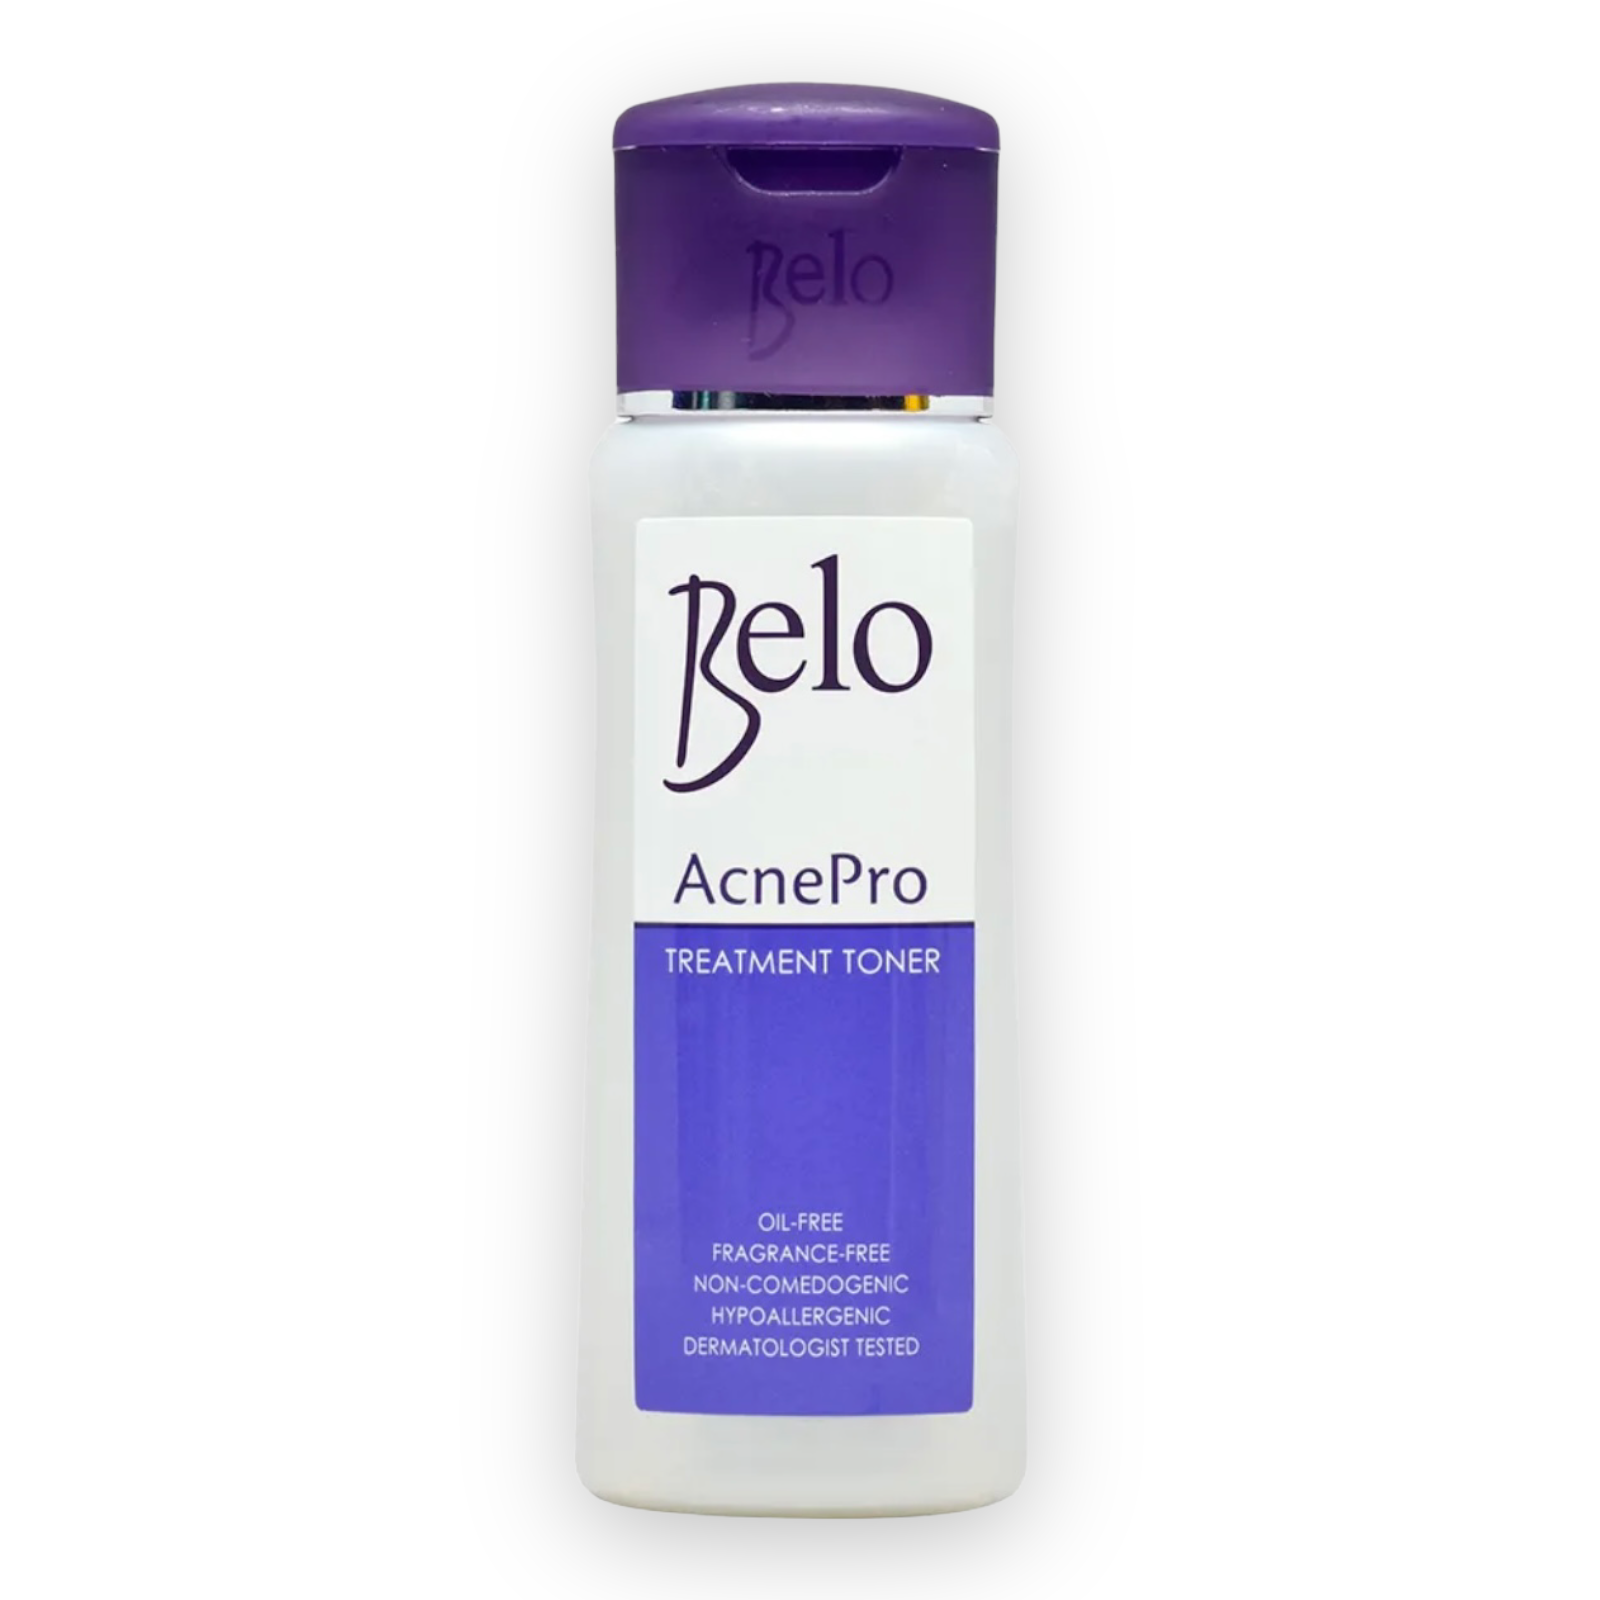 Belo - AcnePro Treatment Toner 60ml